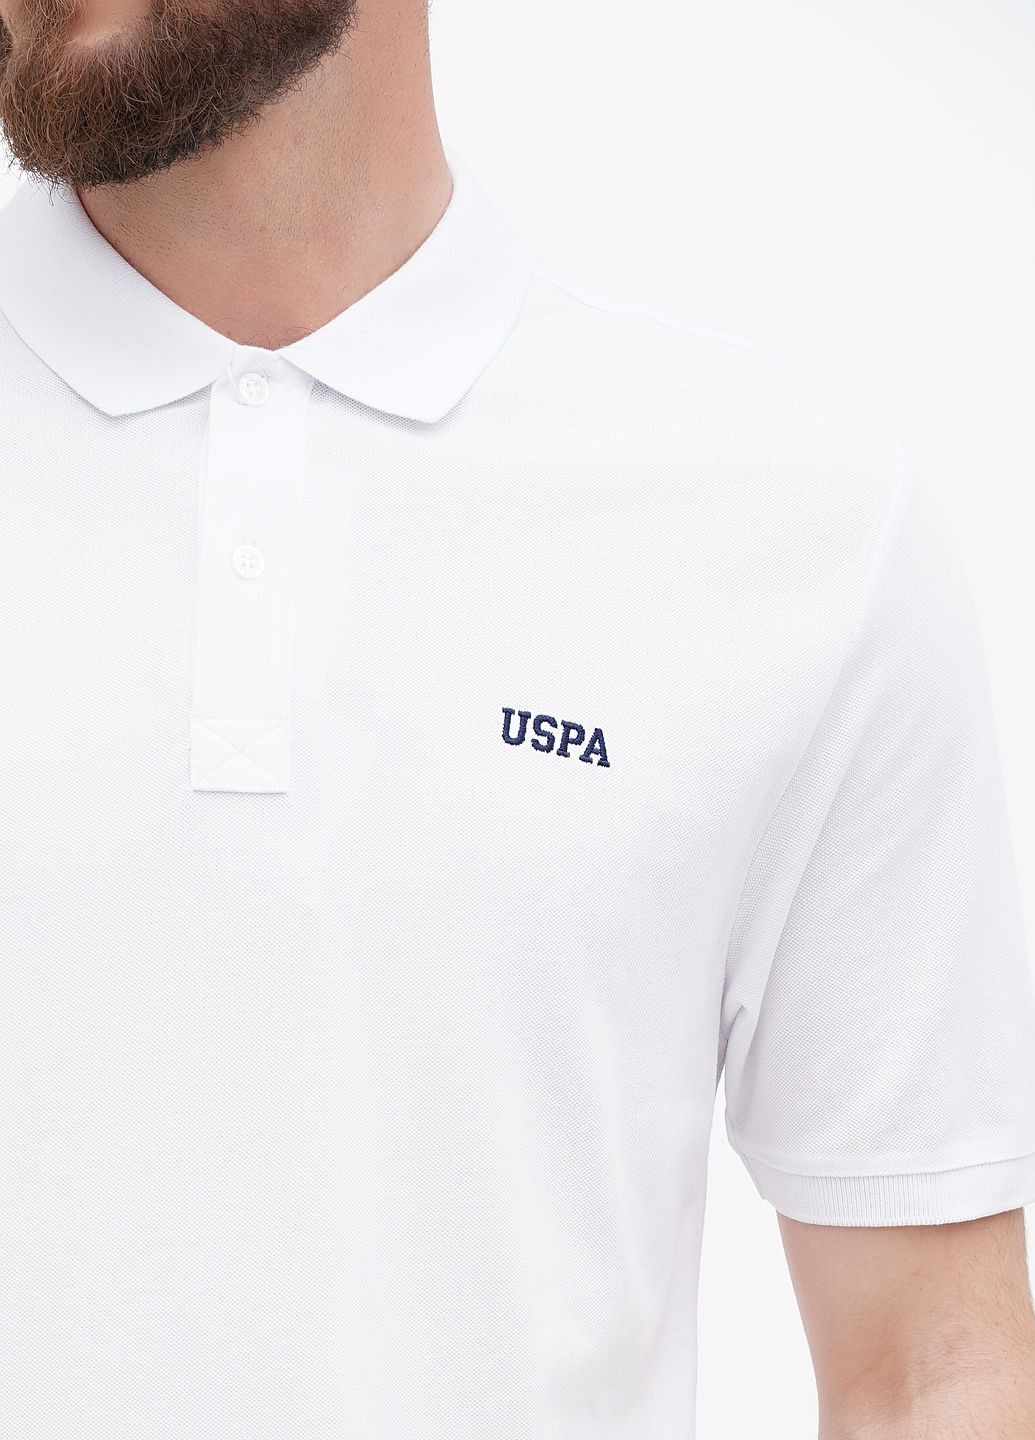 Белая футболка-футболка поло u.s. polo assn мужская для мужчин U.S. Polo Assn.